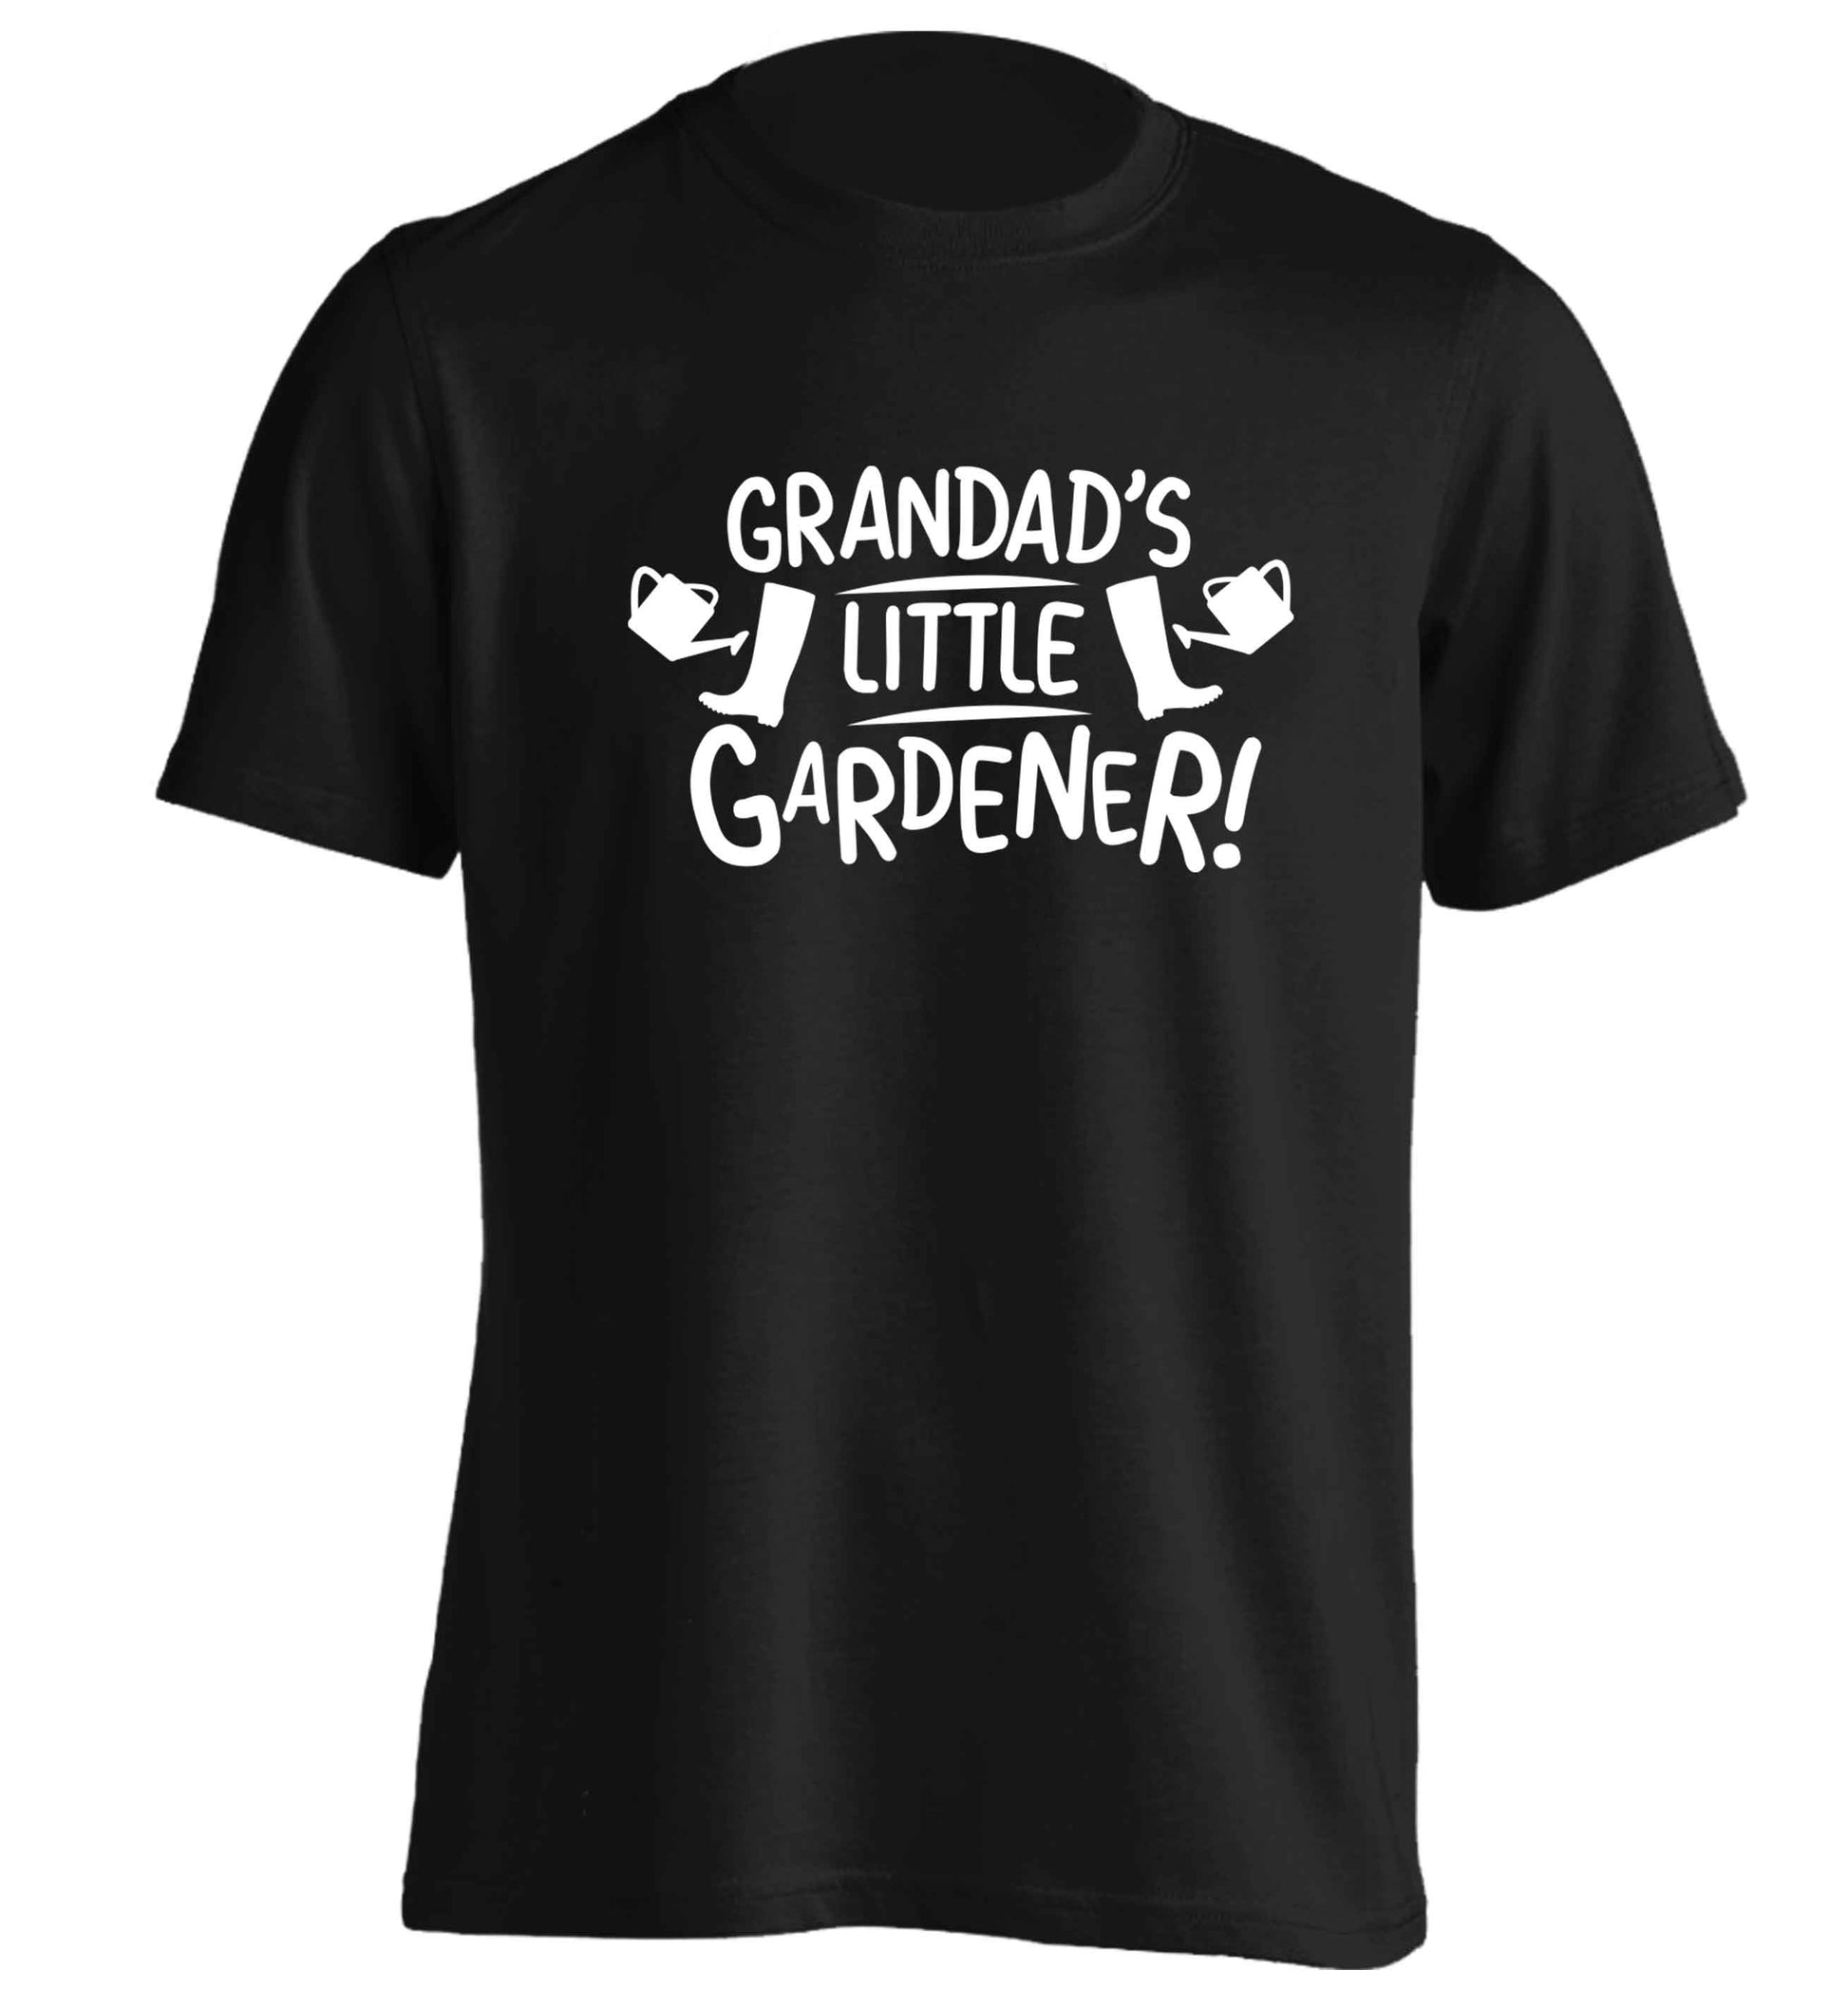 Grandad's little gardener adults unisex black Tshirt 2XL